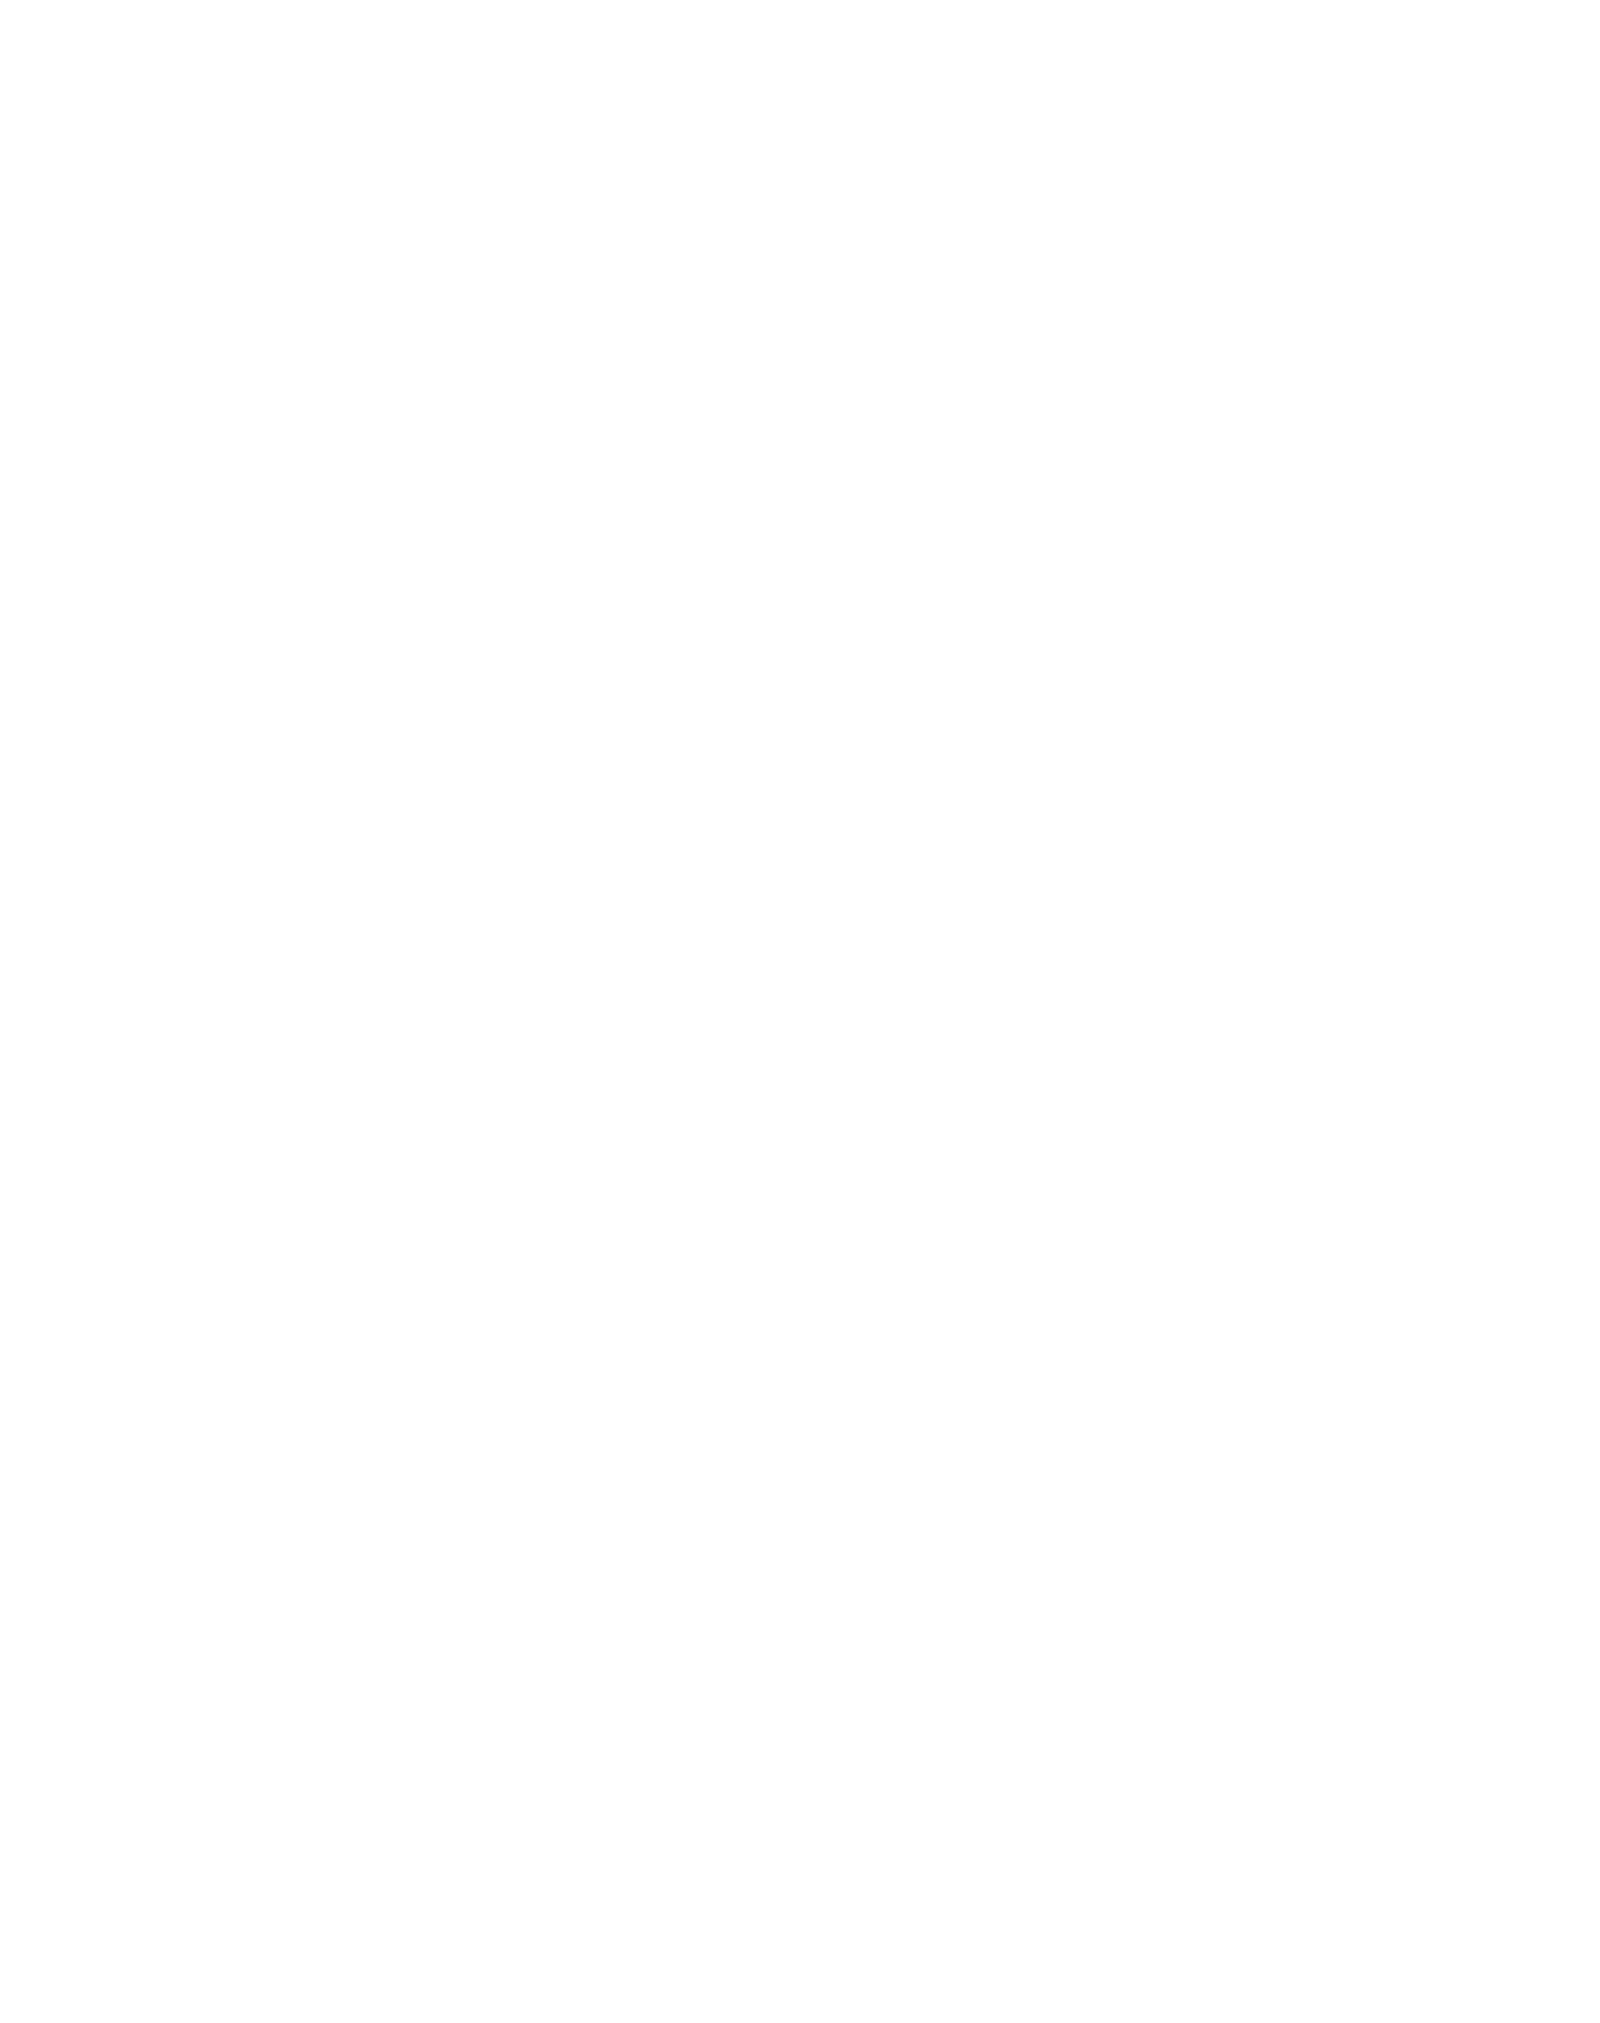 Assassins Creed Unity Logo Transparent Image